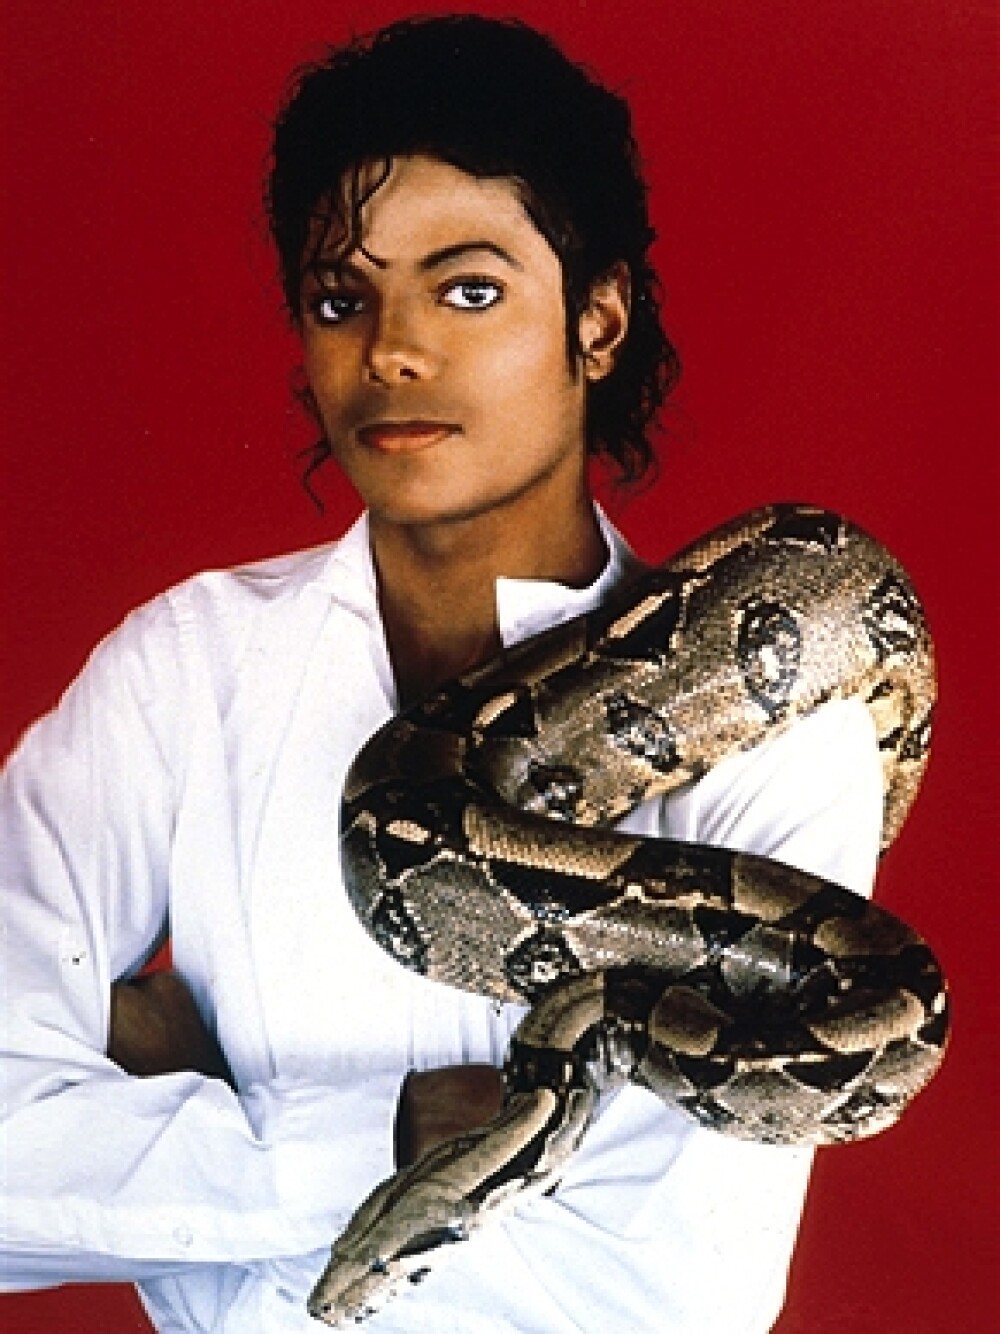 FOTO SOCANT. Prima imagine cu Michael Jackson mort - Imaginea 23